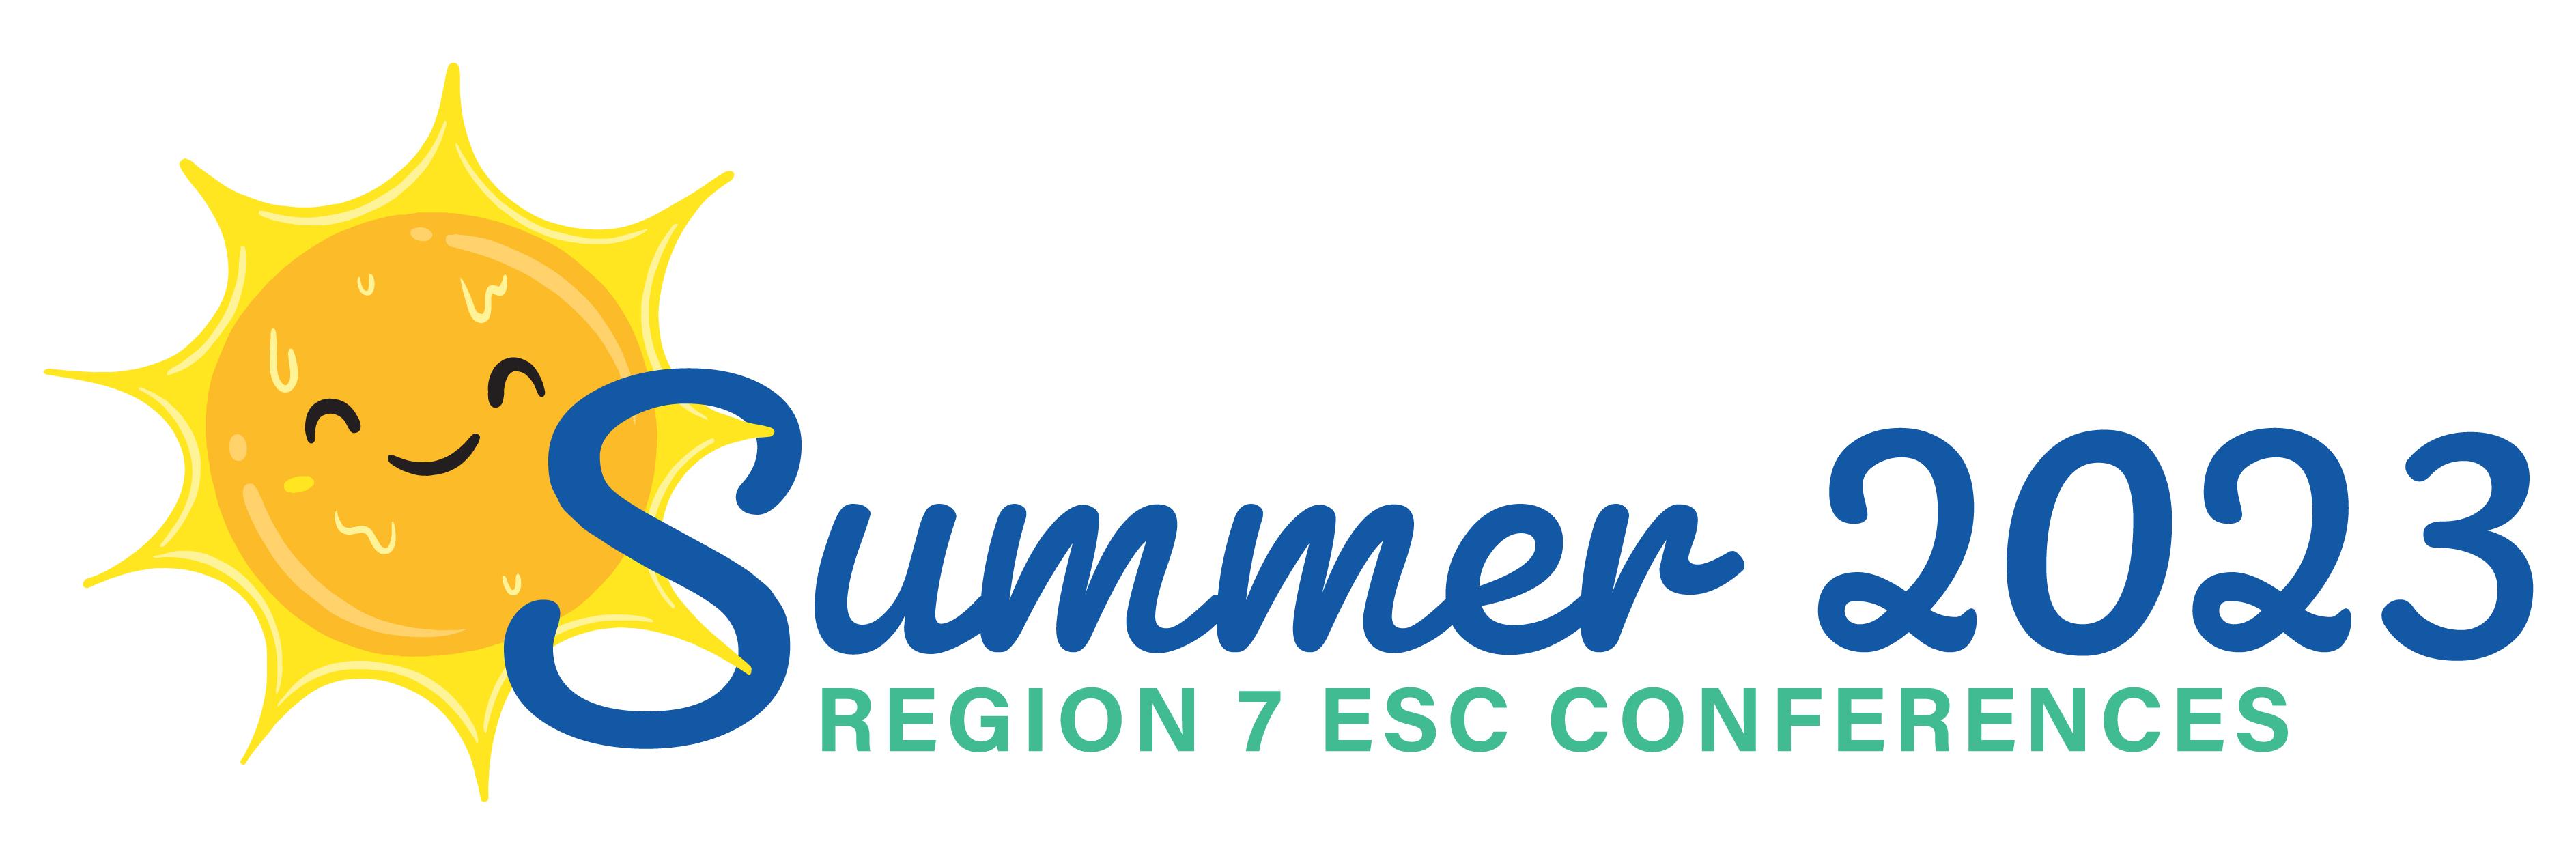 Region 7 Education Service Center Summer Conferences 2023